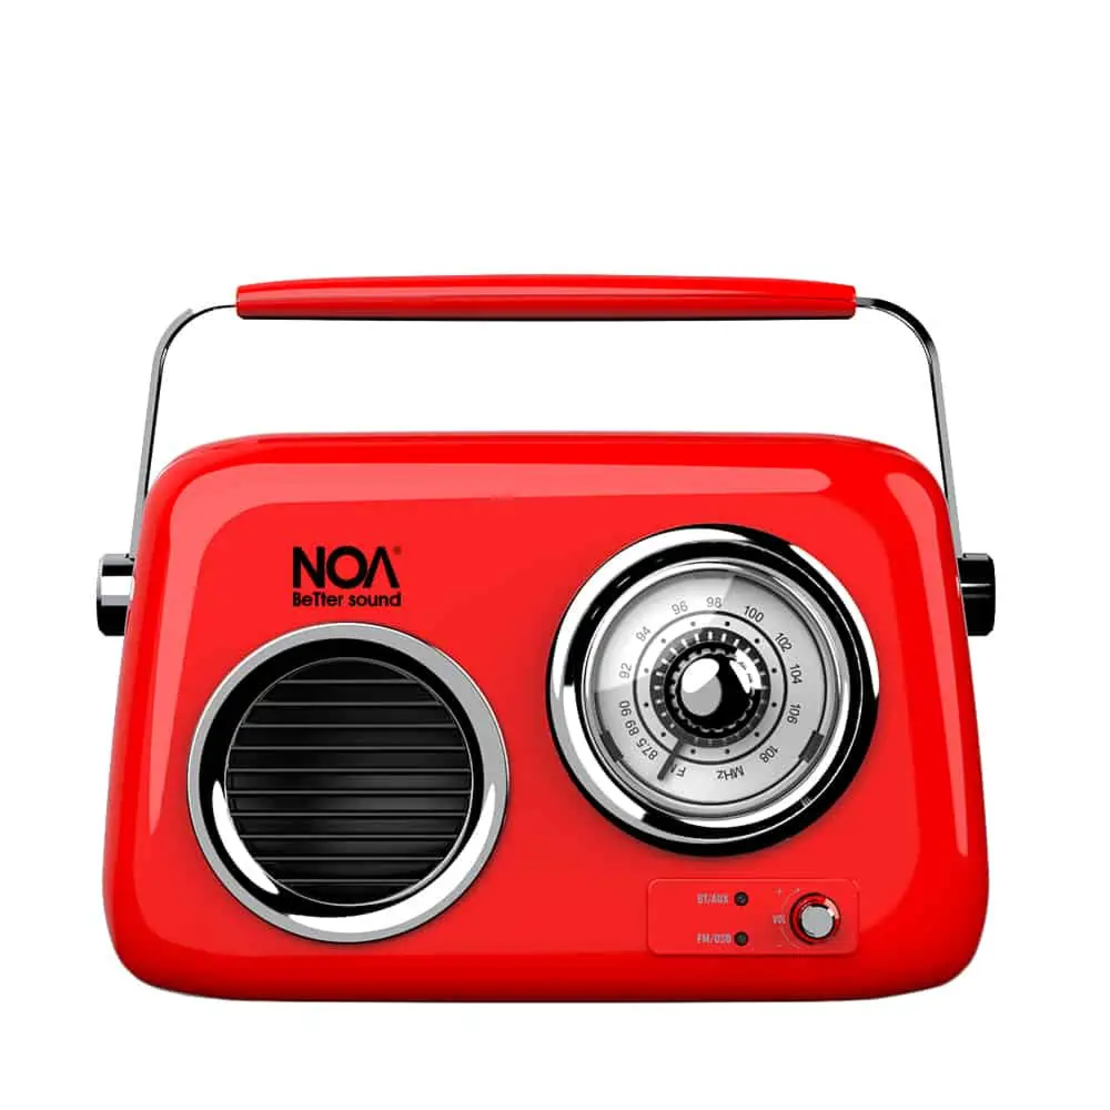 NOA Retro רדיו משולב רמקול Bluetooth מעוצב בסגנון רטרו